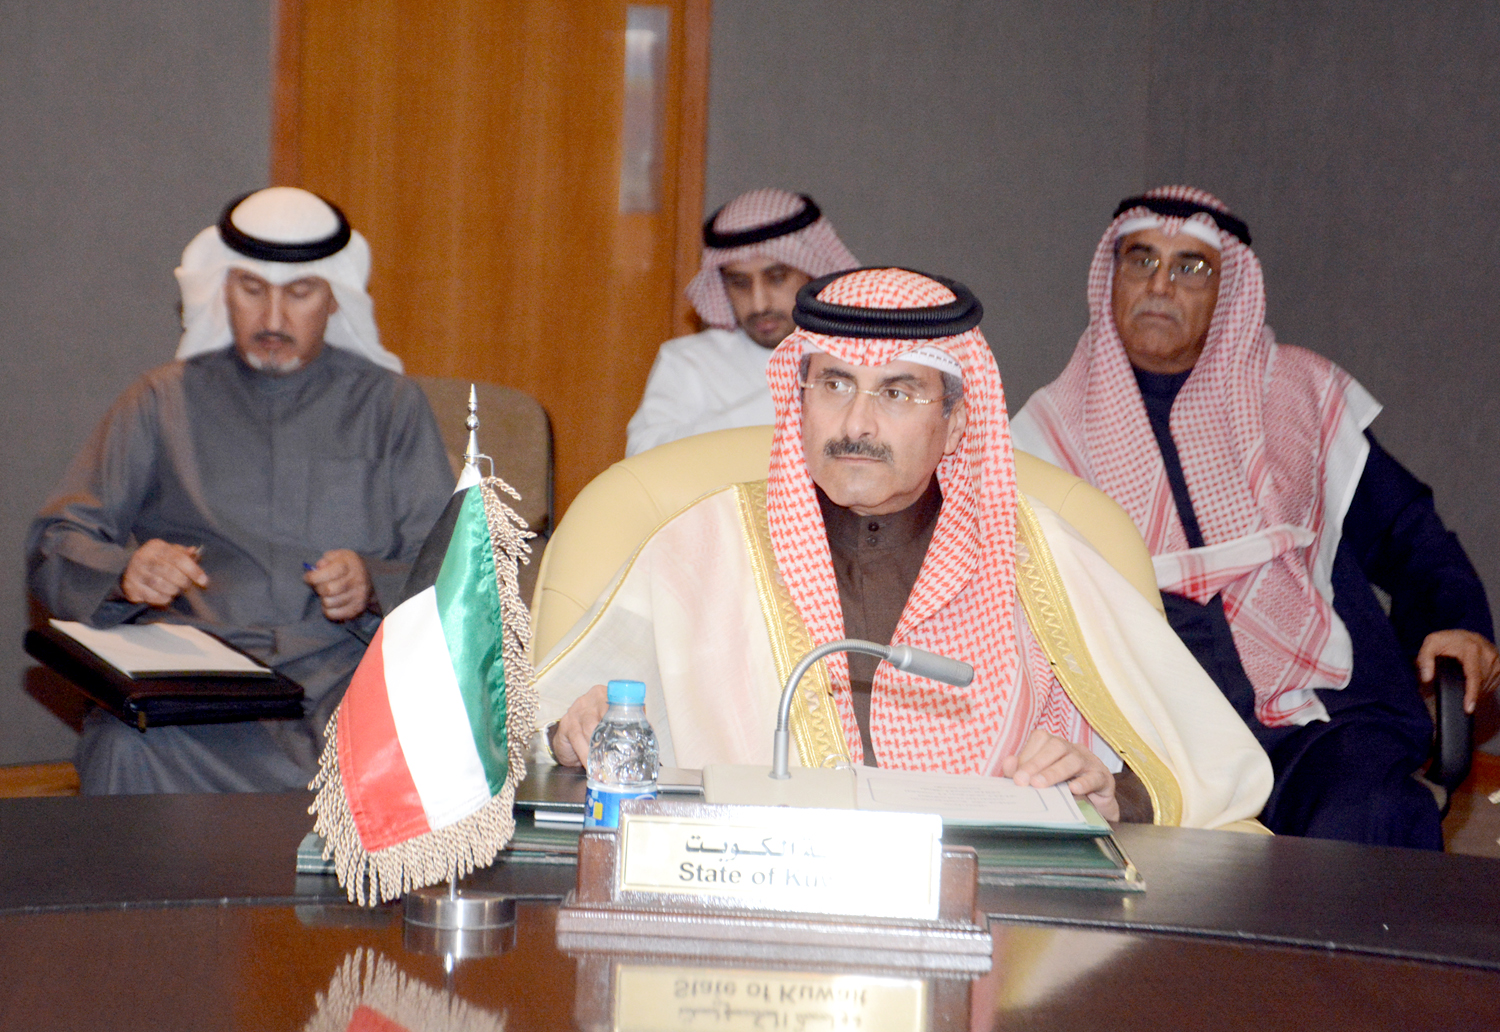 KUNA chief Sheikh Mubarak Al-Duaij during the meeting